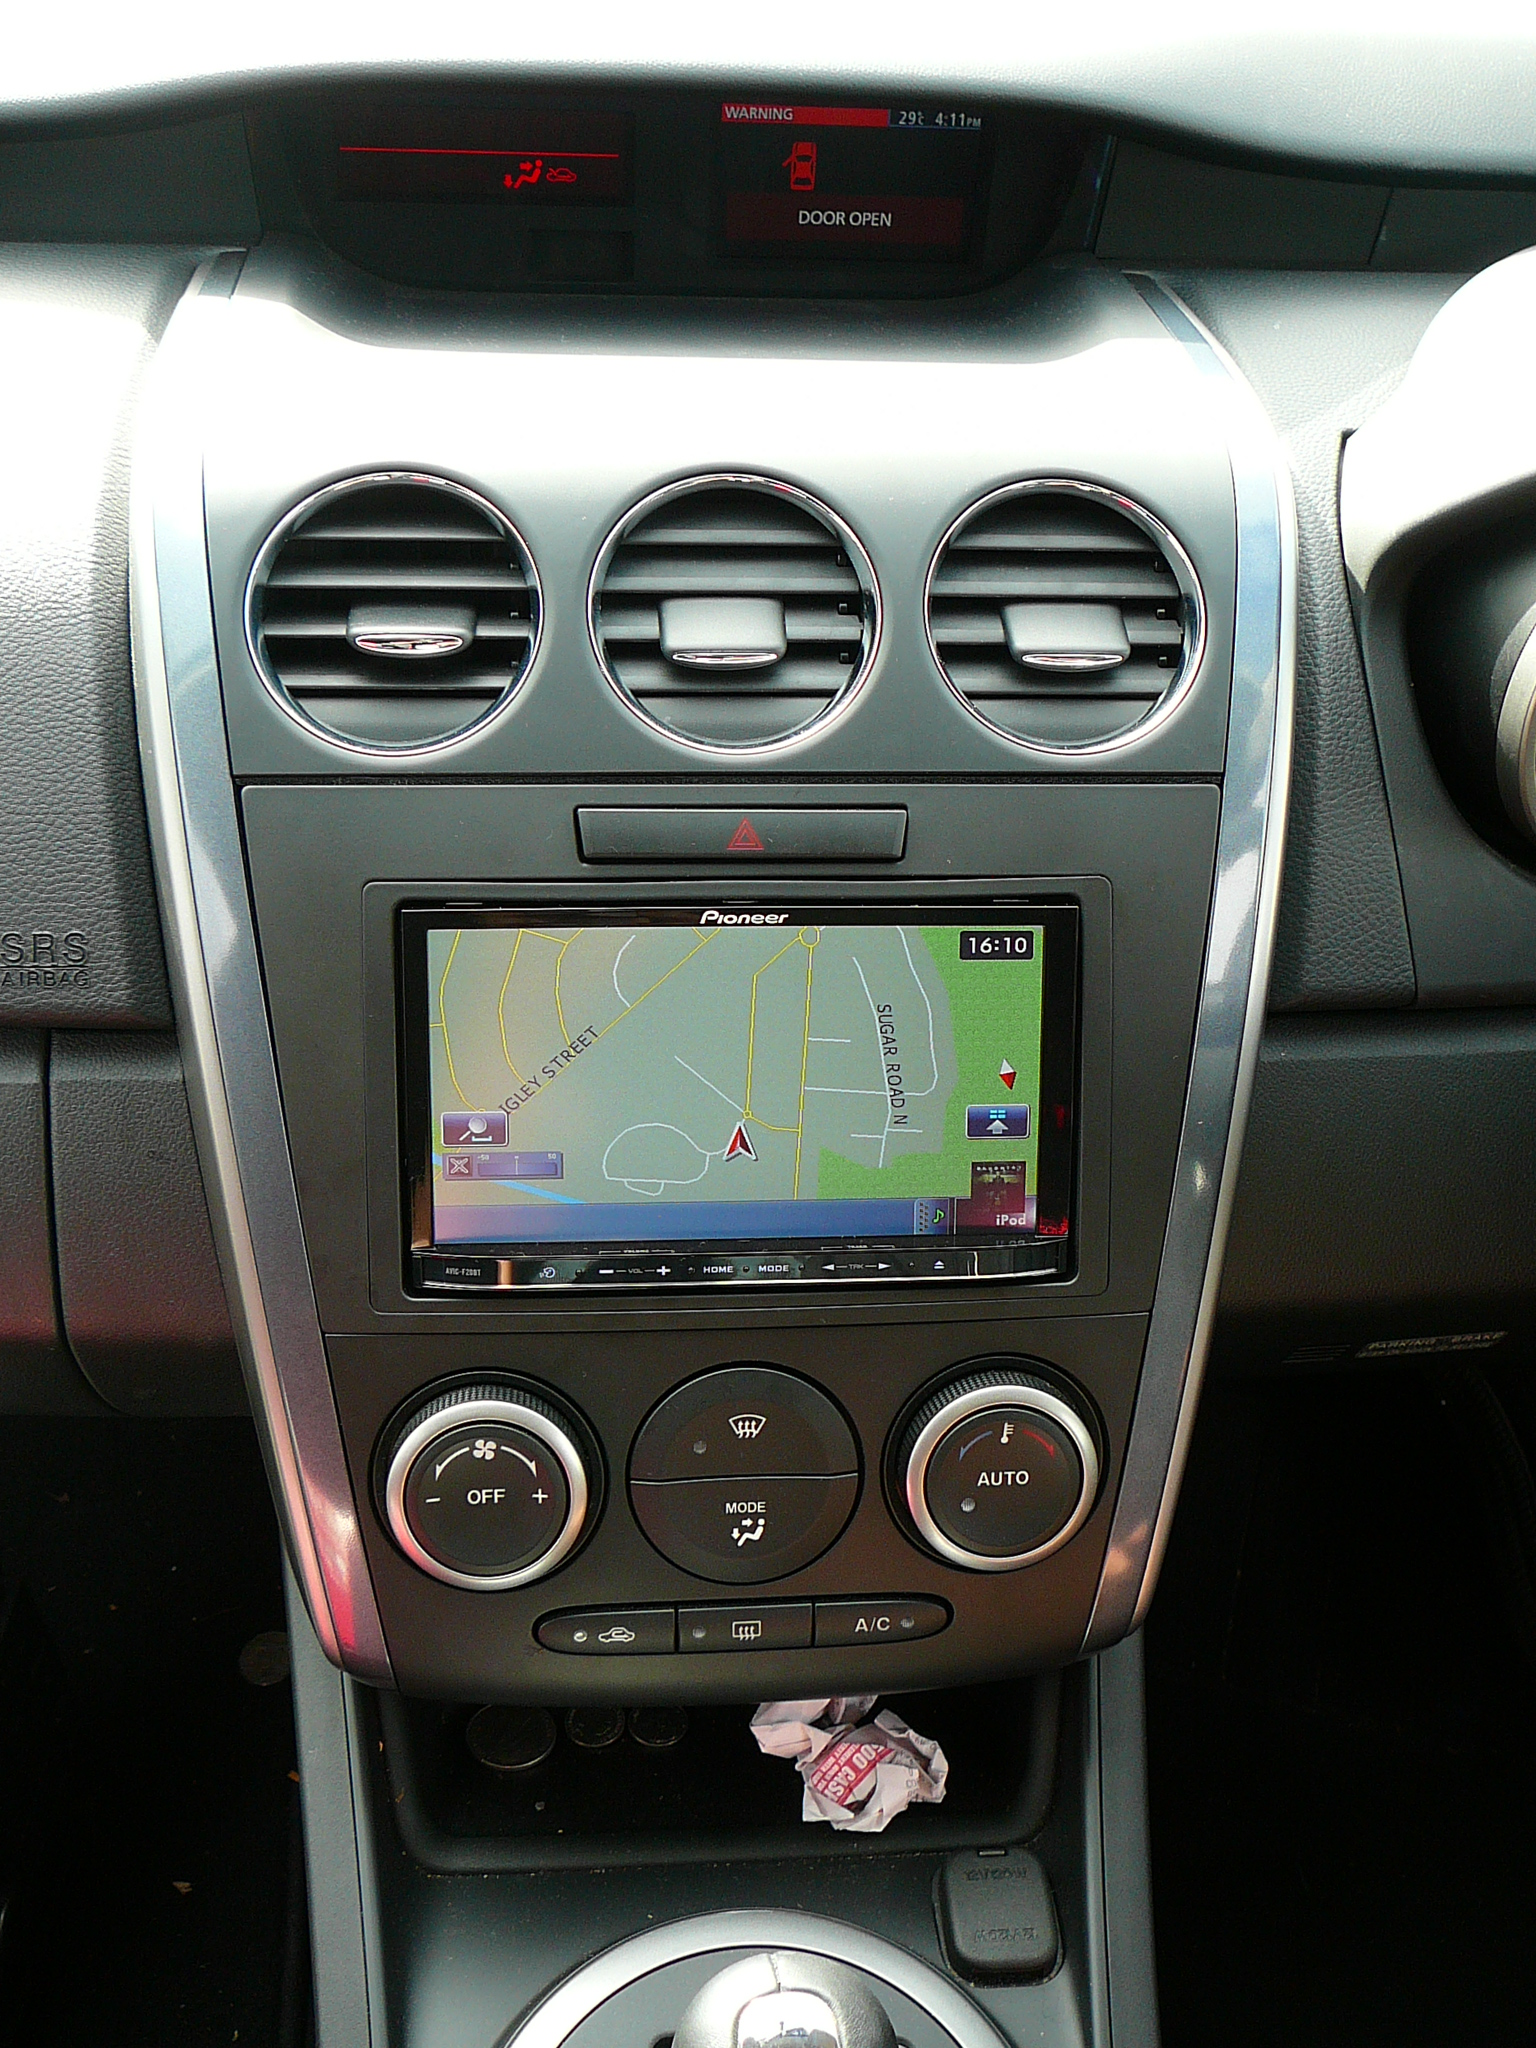 Mazda CX-7 series2 with Pioneer GPS Navigation and dash kit